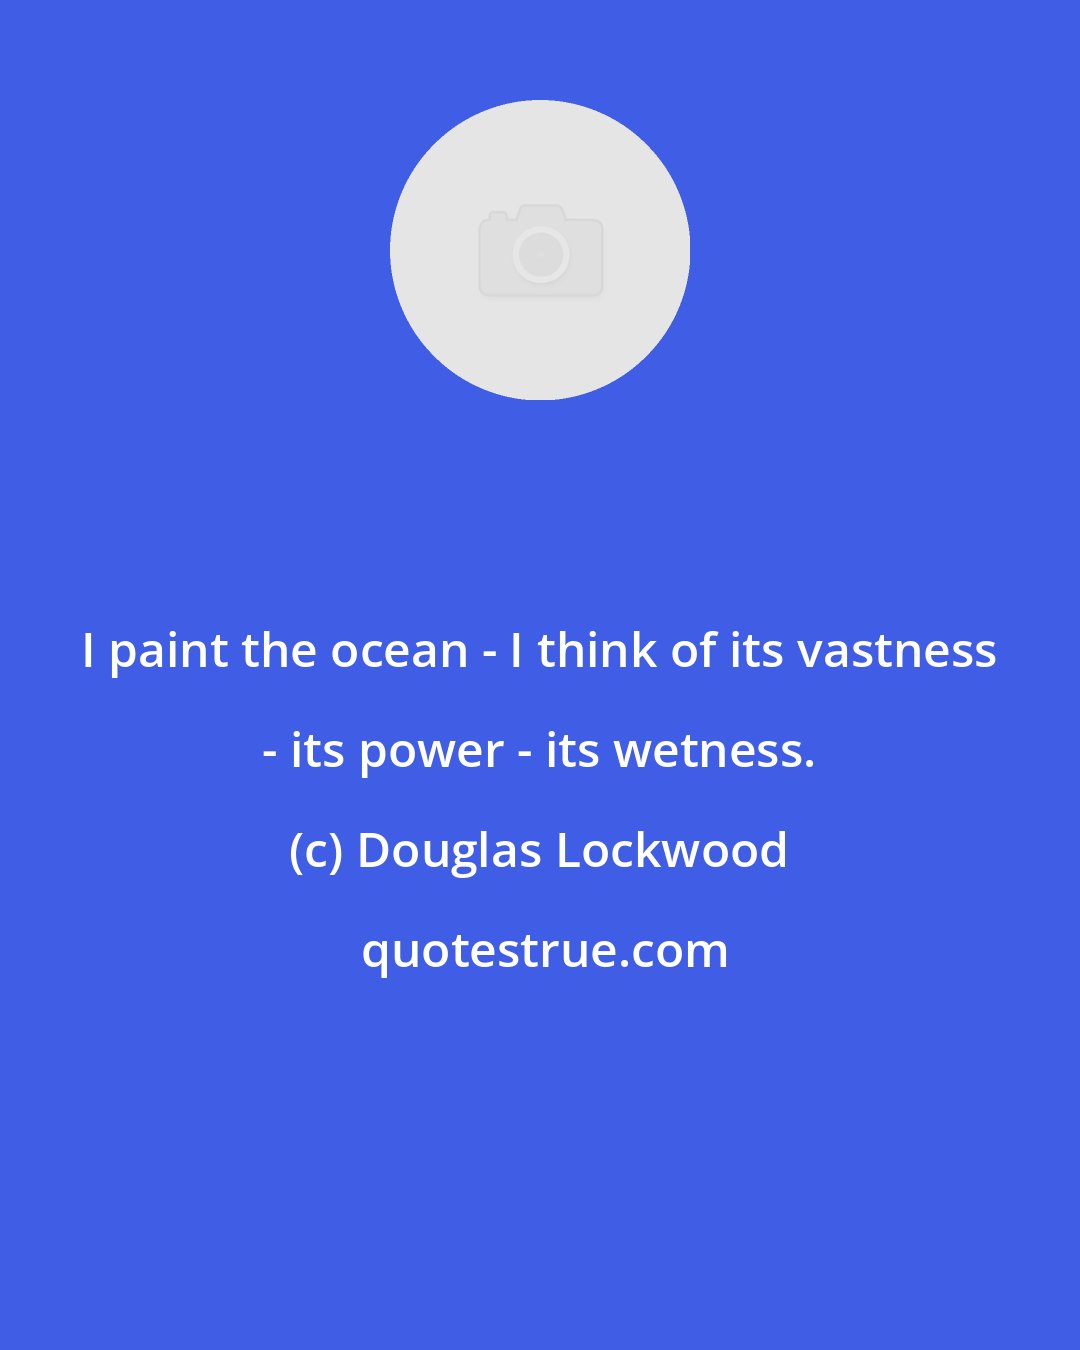 Douglas Lockwood: I paint the ocean - I think of its vastness - its power - its wetness.